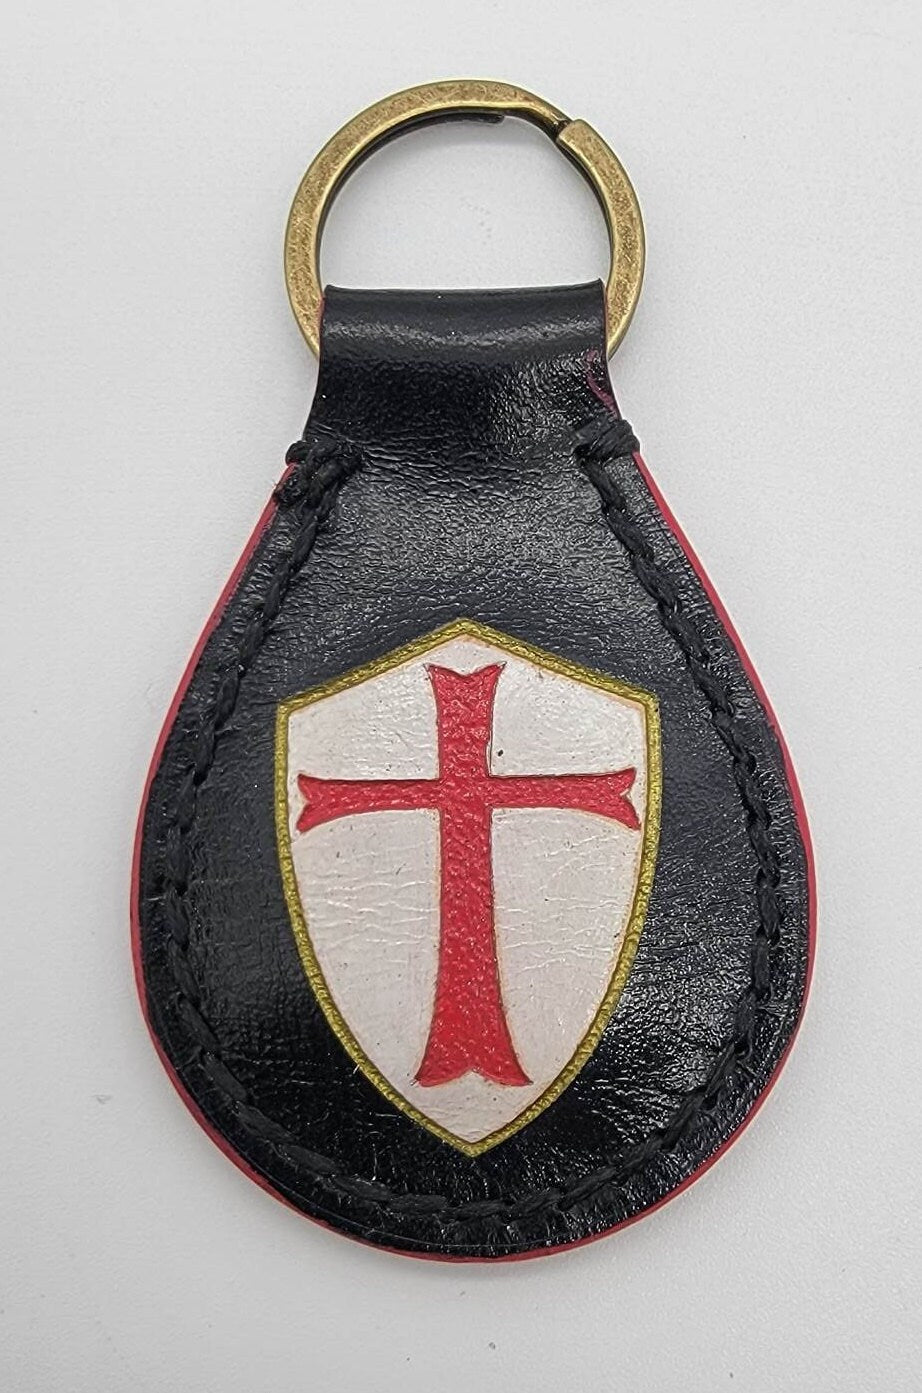 Knights Templar Crusader Cross And Shield Keychain